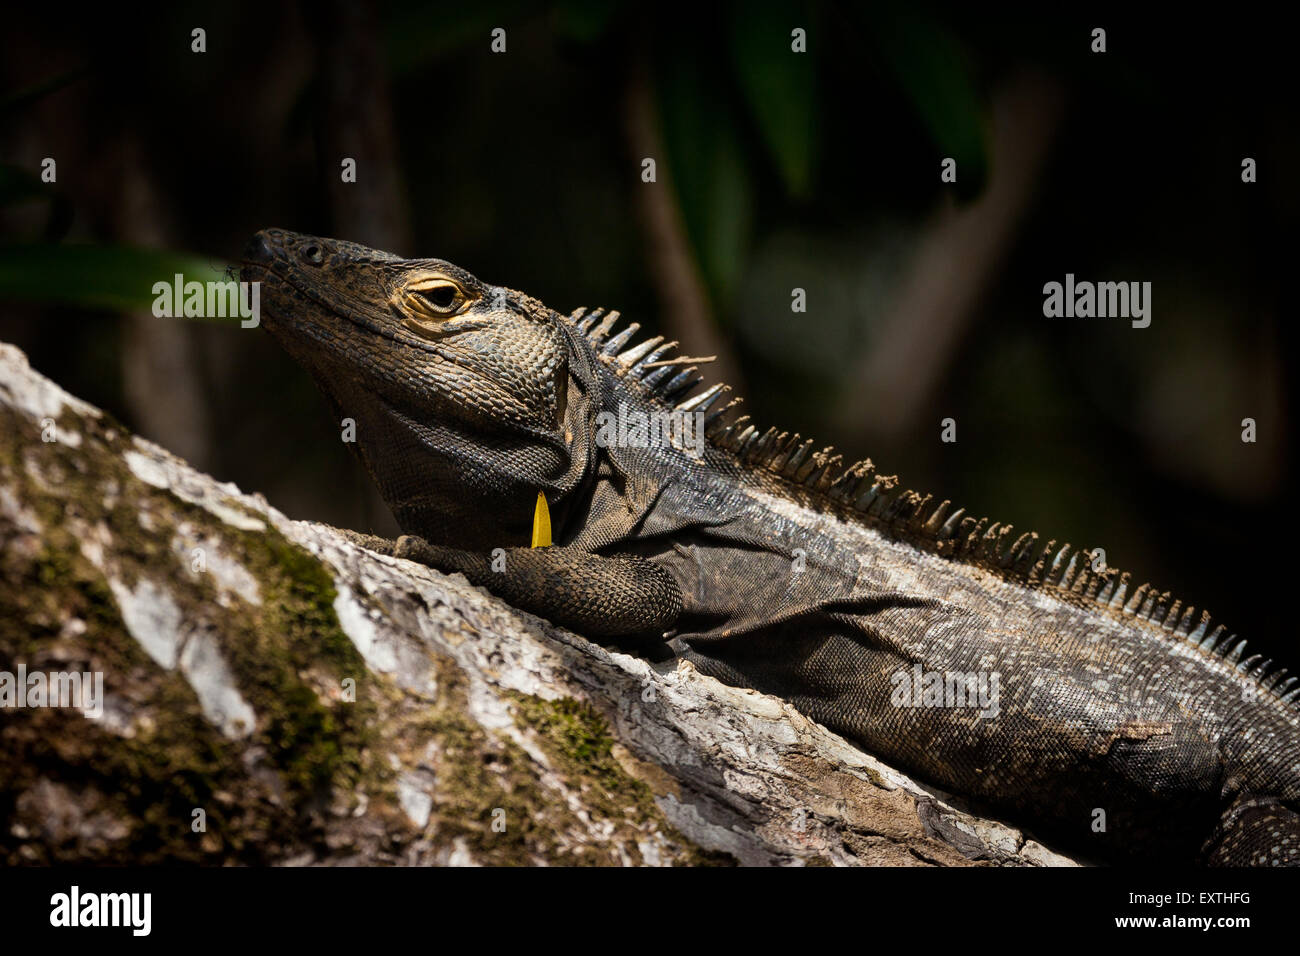 Black spiny-tailed iguana, Ctenosaura similis, inside the mangrove forest at Isla de Coiba national park, Veraguas province, Republic of Panama. Stock Photo